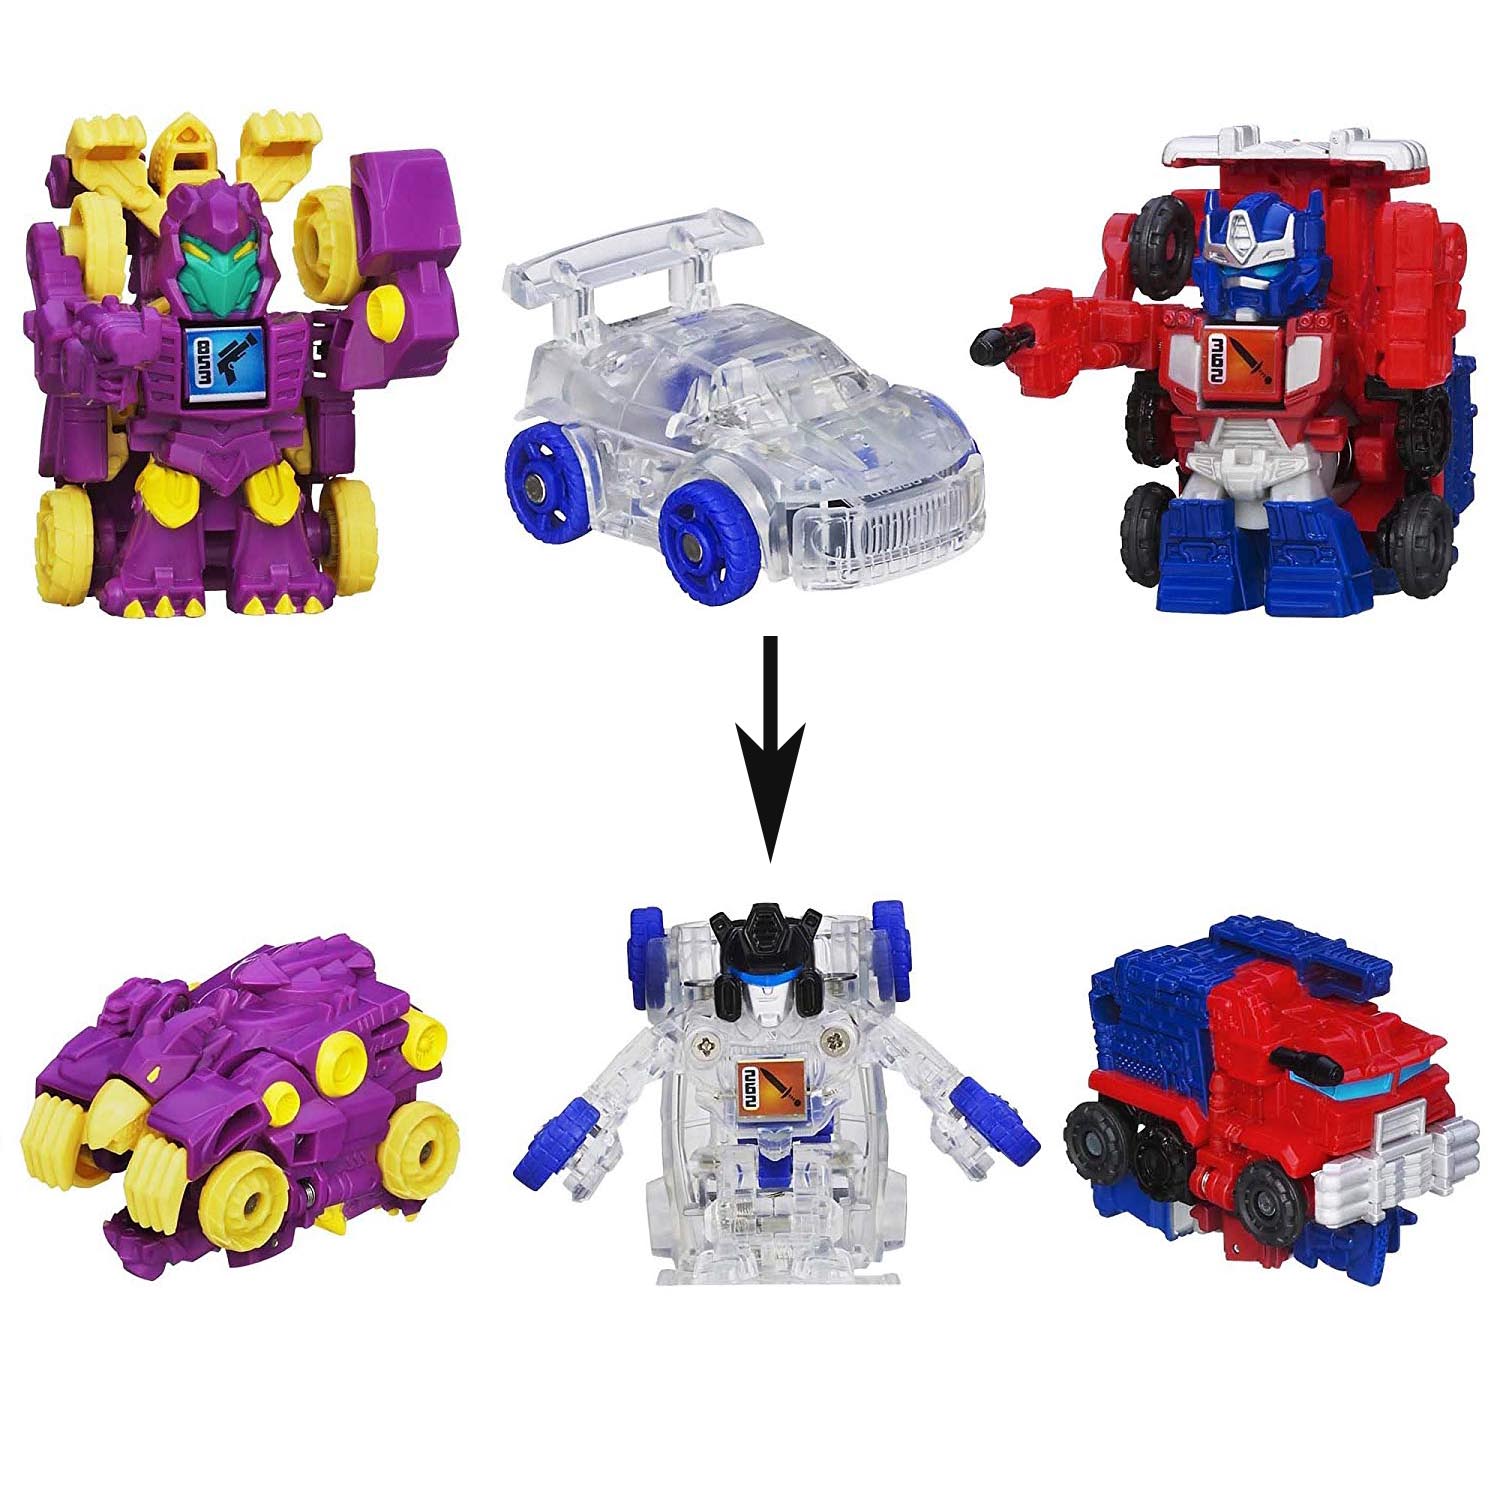 đồ chơi Robot Transformer Mini Bot Shots - Cindersaur, Optimus Prime và Autobot Jazz